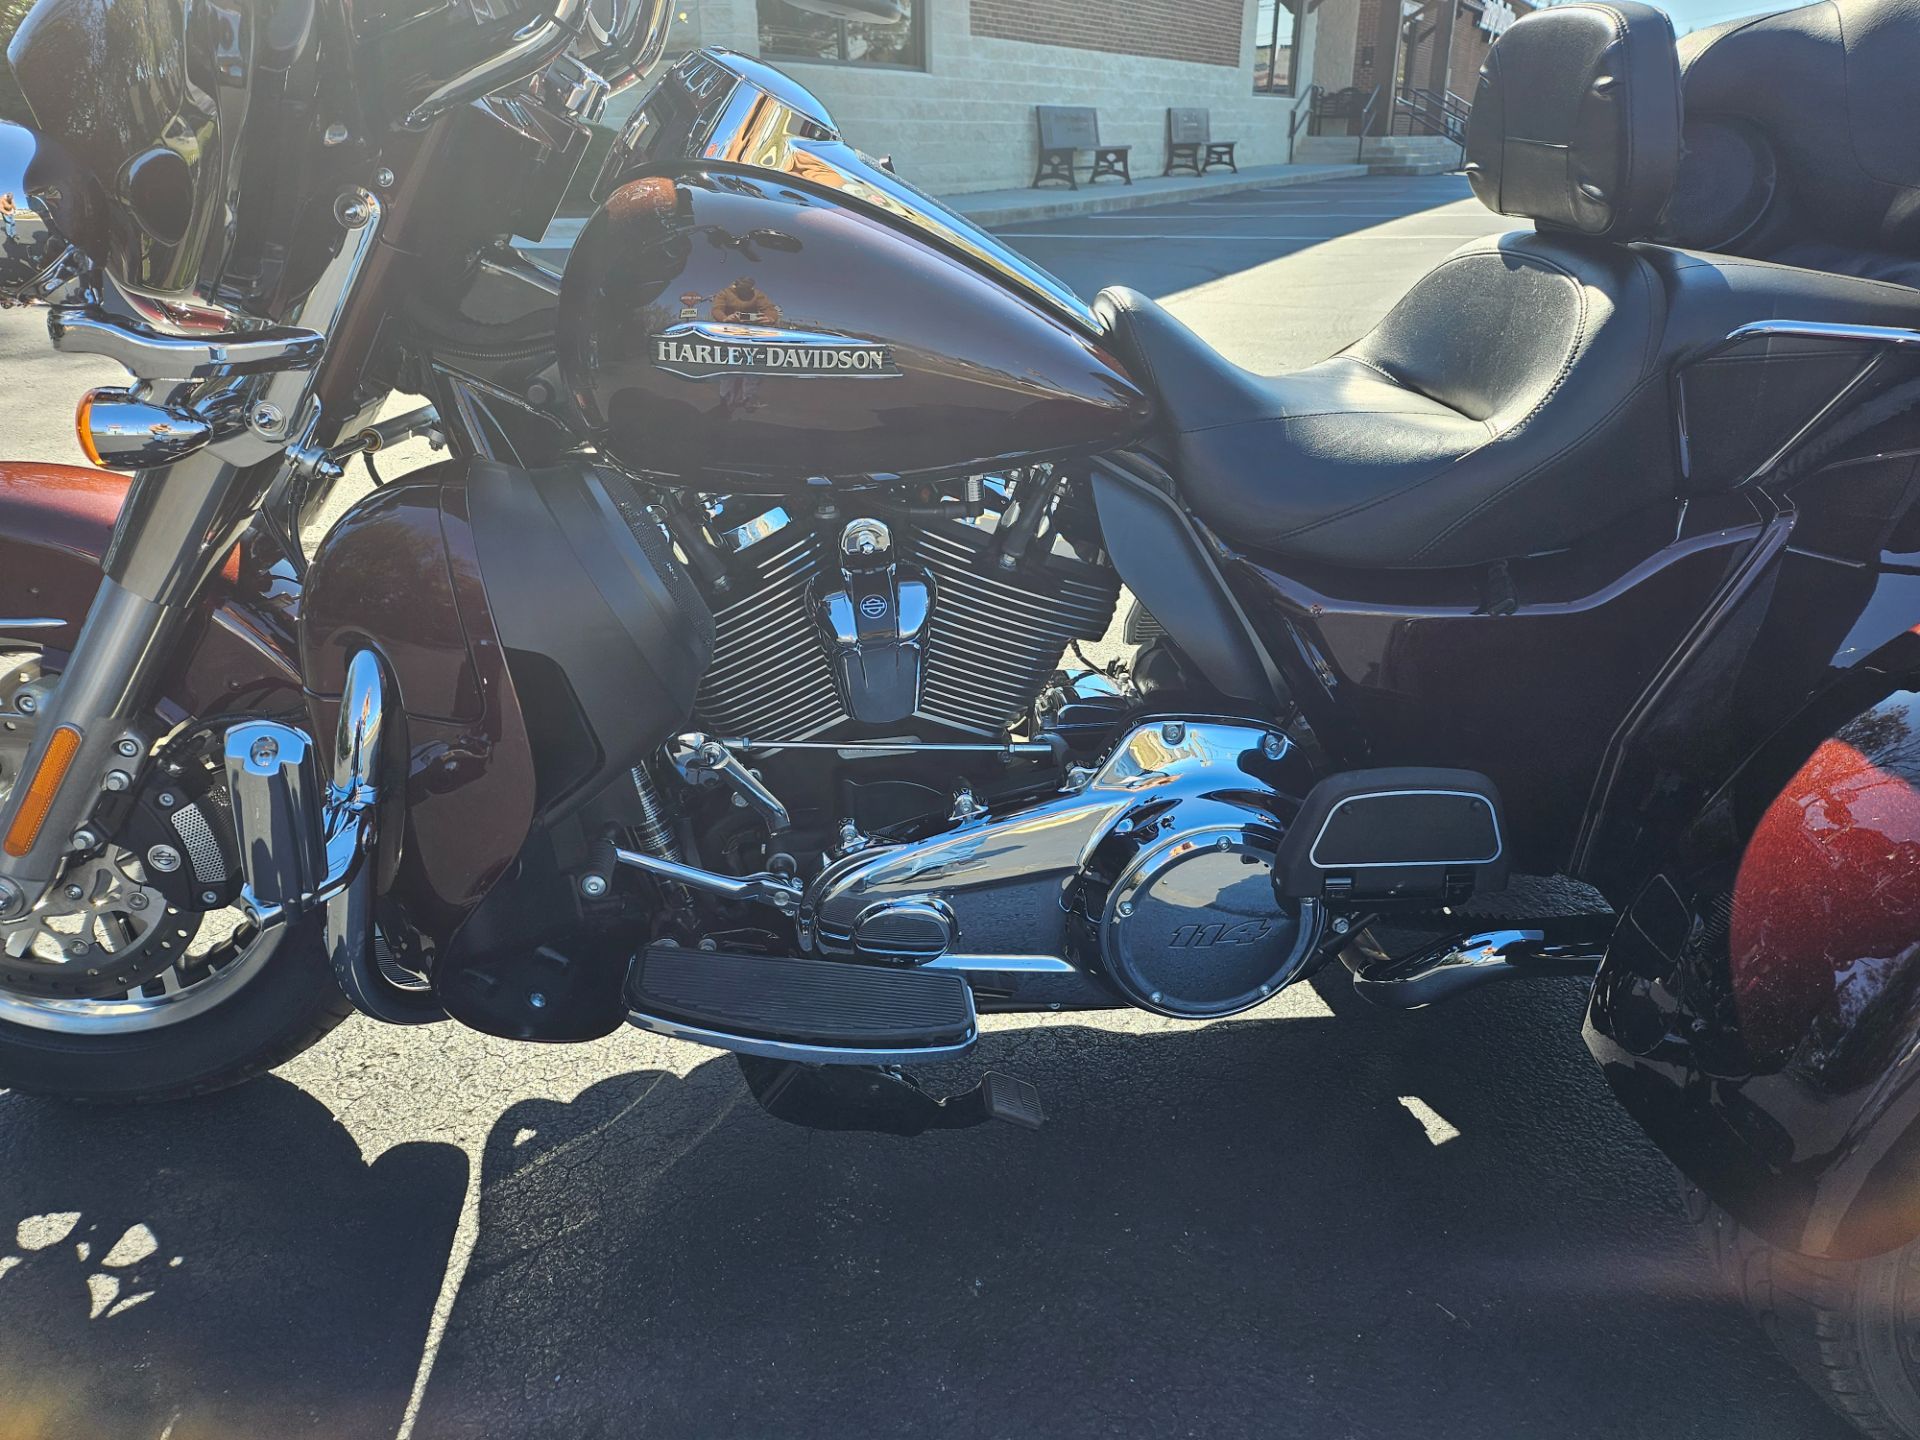 2019 Harley-Davidson Tri Glide® Ultra in Lynchburg, Virginia - Photo 13